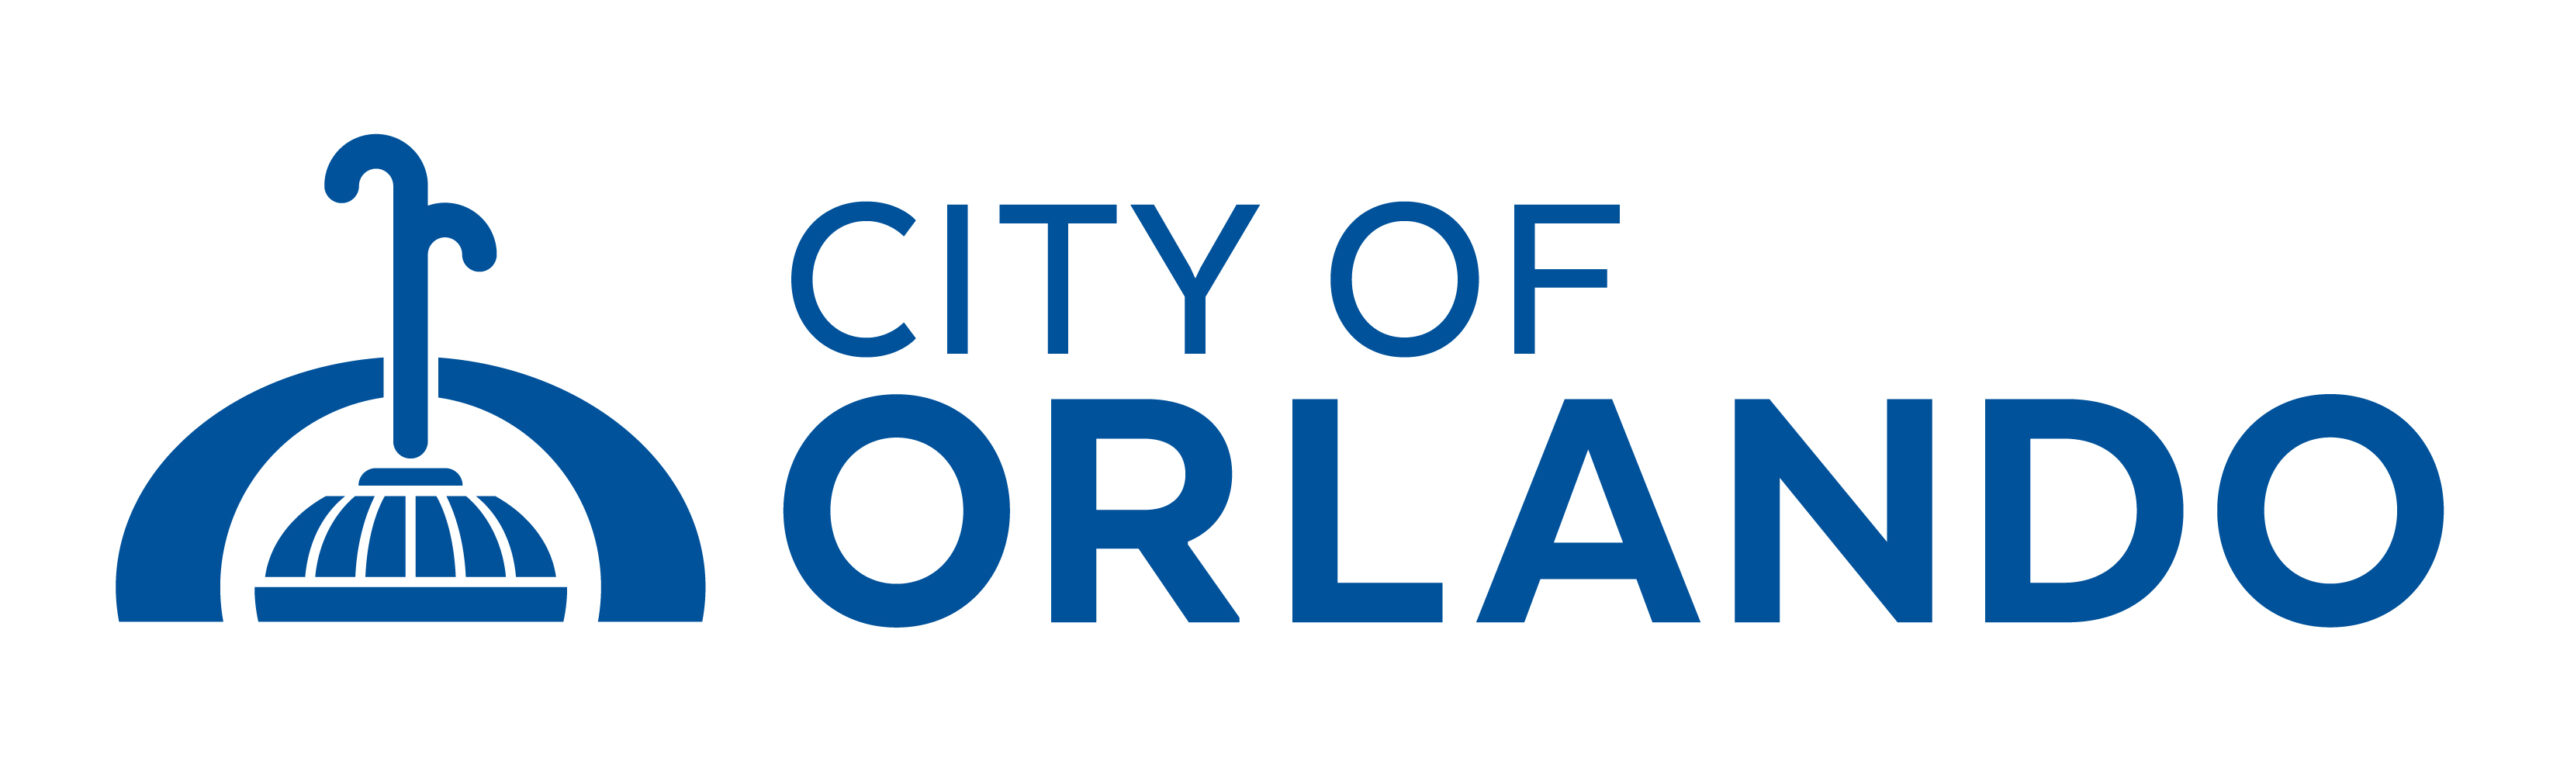 Cityoforlando Horizontal Rgb Logo Official